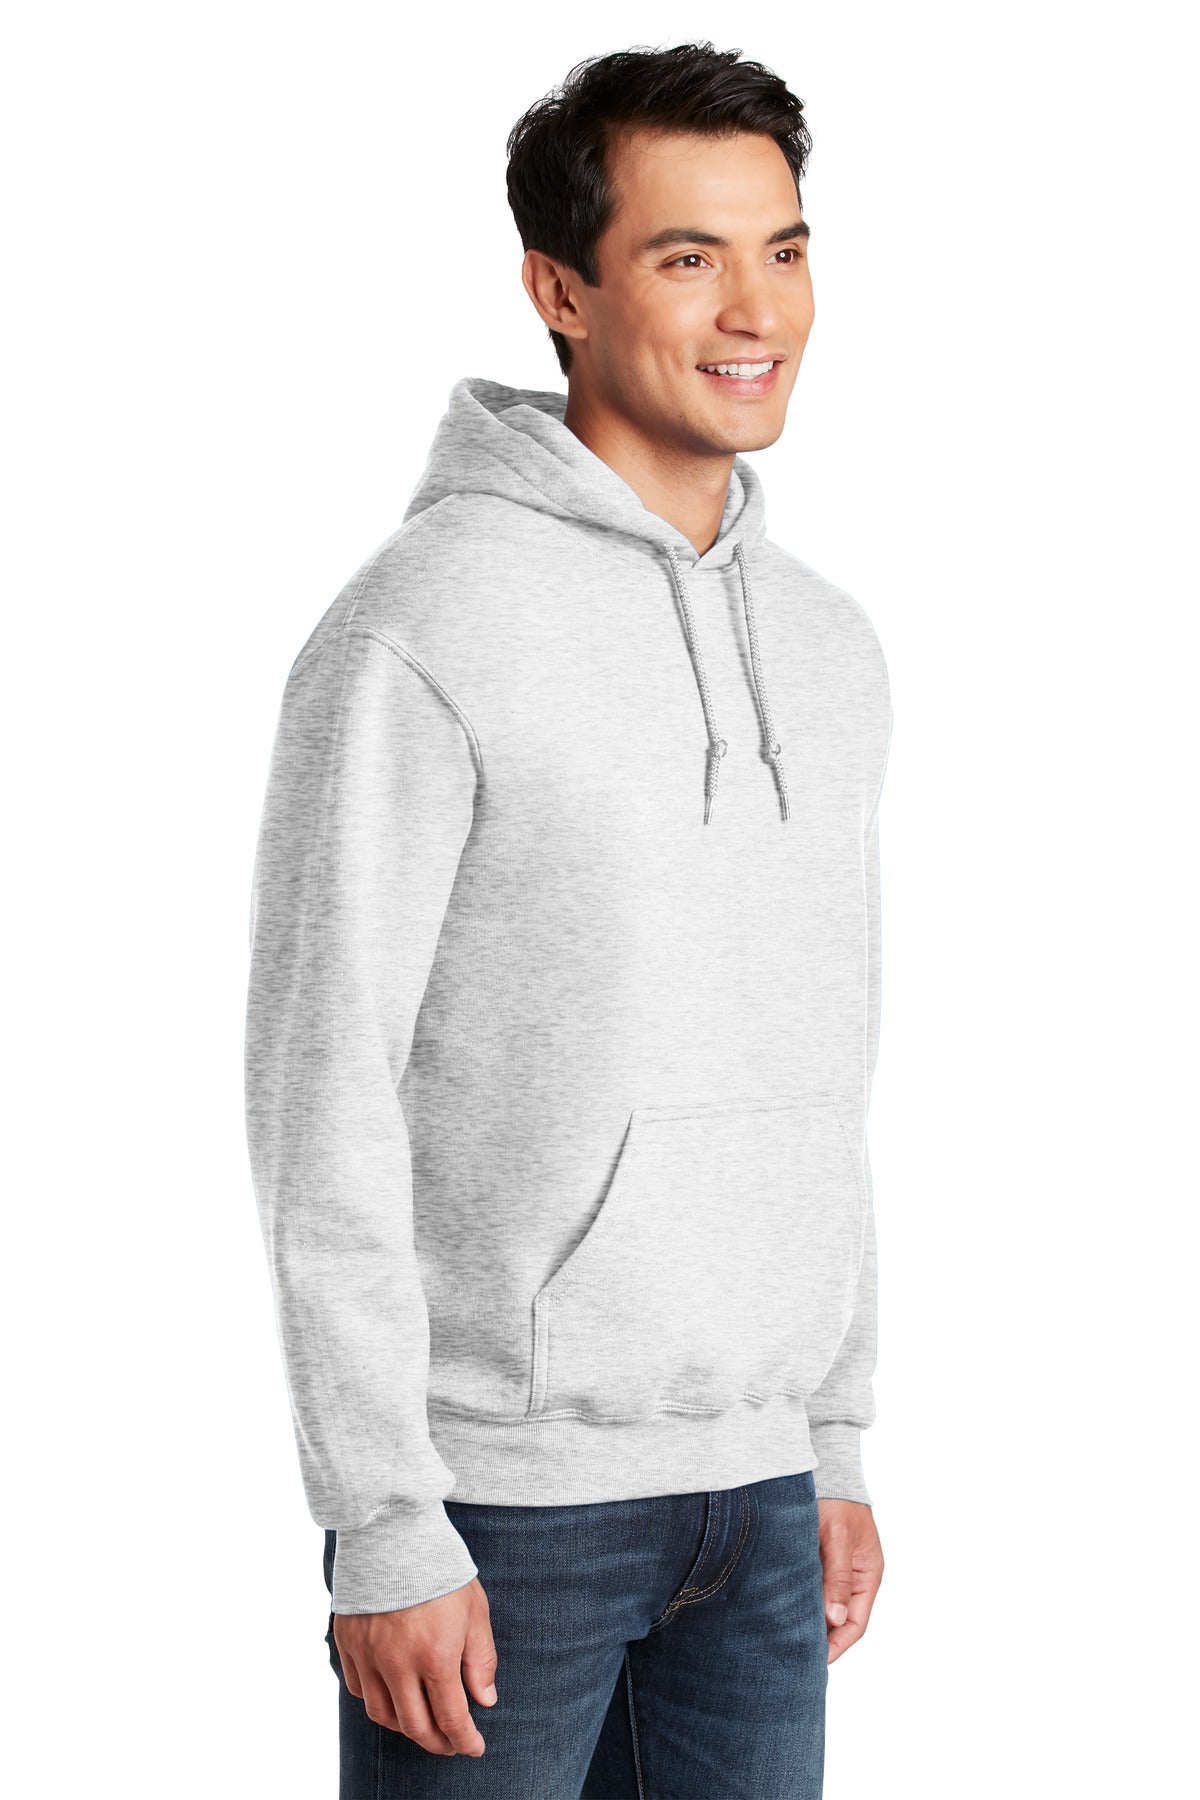 Gildan - DryBlend Pullover Hooded Sweatshirt. 12500 - BT Imprintables Shirts